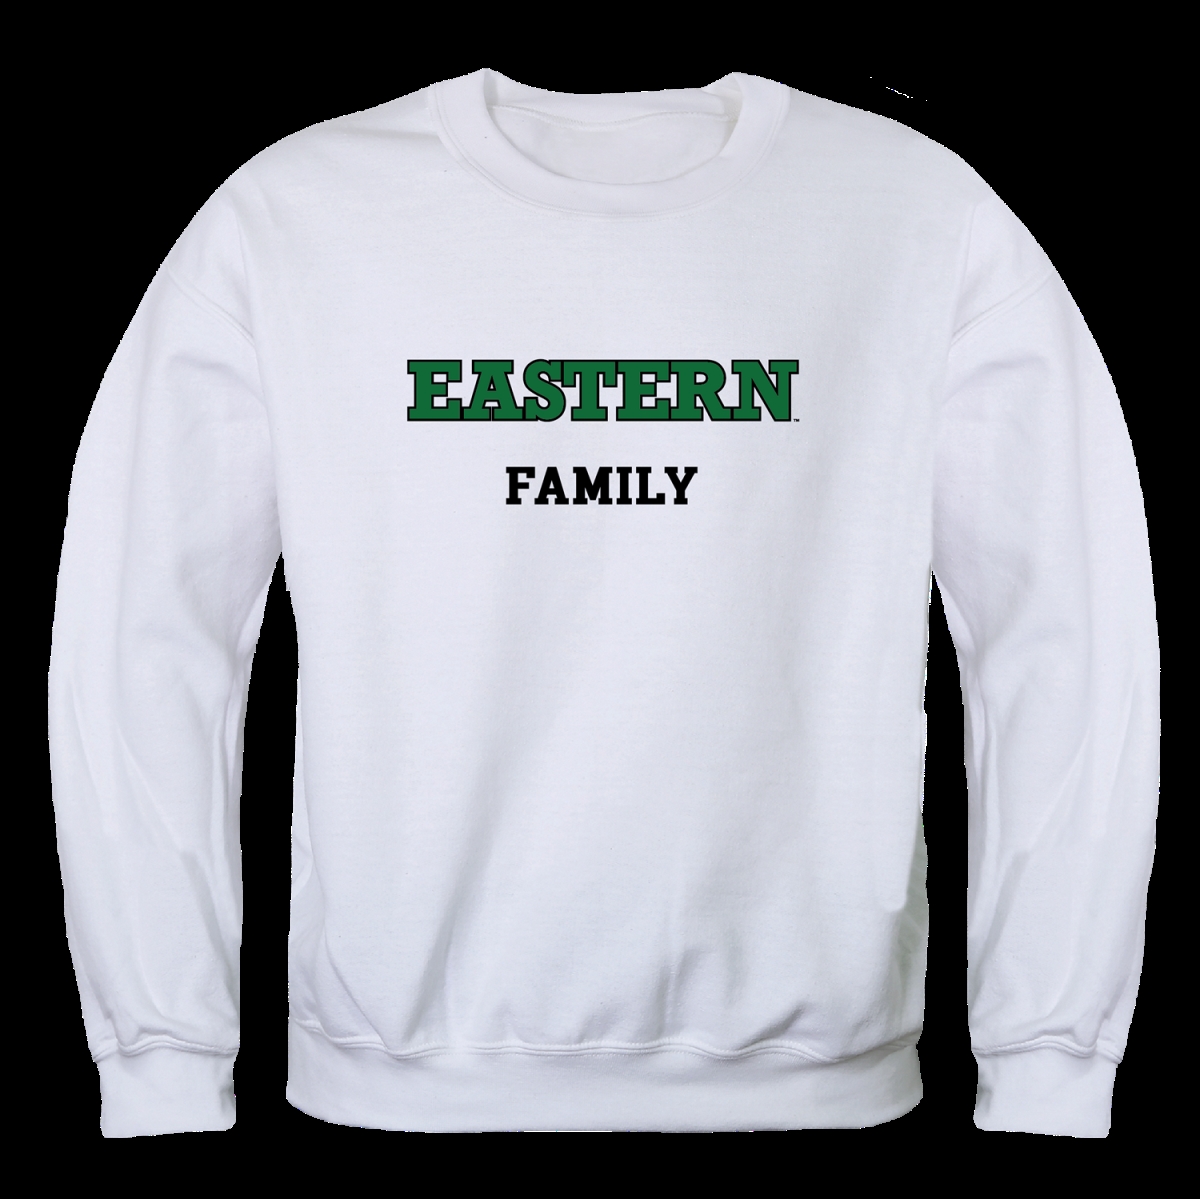 W Republic 572-295-WHT-05 Eastern Michigan University Eagles Family Crewneck Sweatshirt&#44; White - 2XL